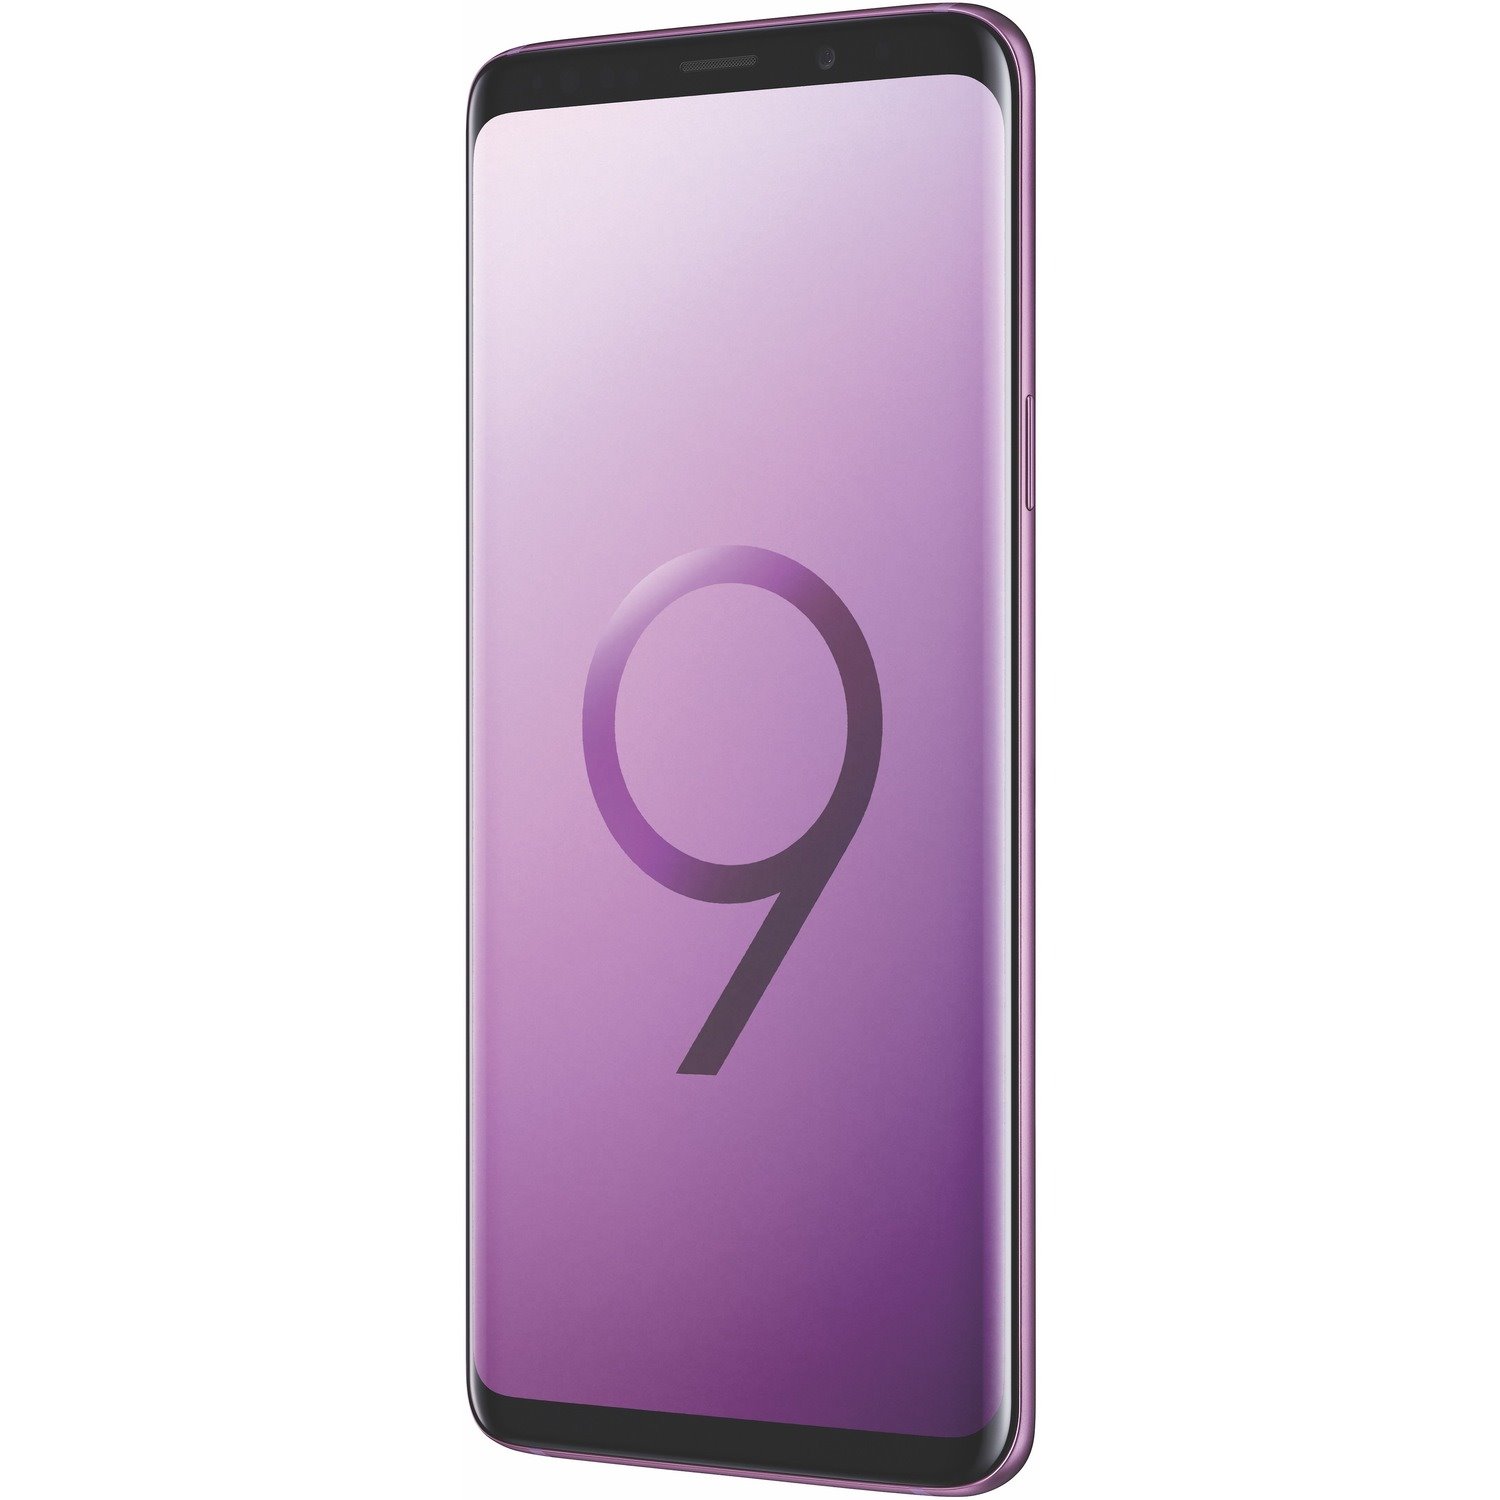 Samsung Galaxy S9 SM-G960W 64 GB Smartphone - 5.8" Super AMOLED QHD+ 2960 x 1440 - 4 GB RAM - Android 8.0 Oreo - 4G - Lilac Purple